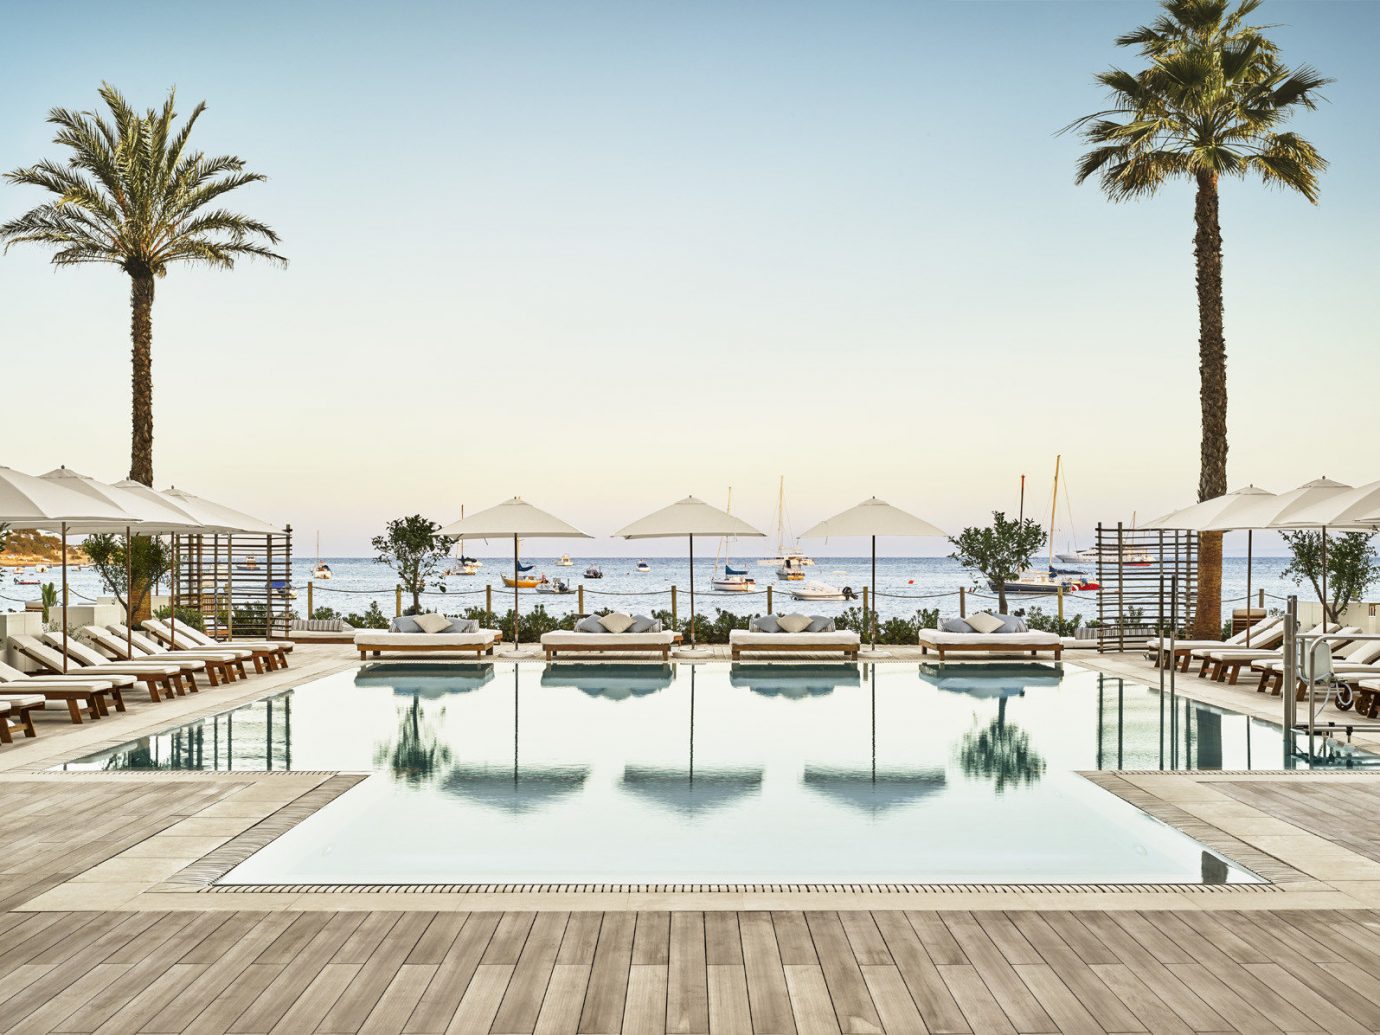 europe Trip Ideas sky outdoor Resort swimming pool vacation palm tree arecales leisure hotel estate tourism condominium palm area